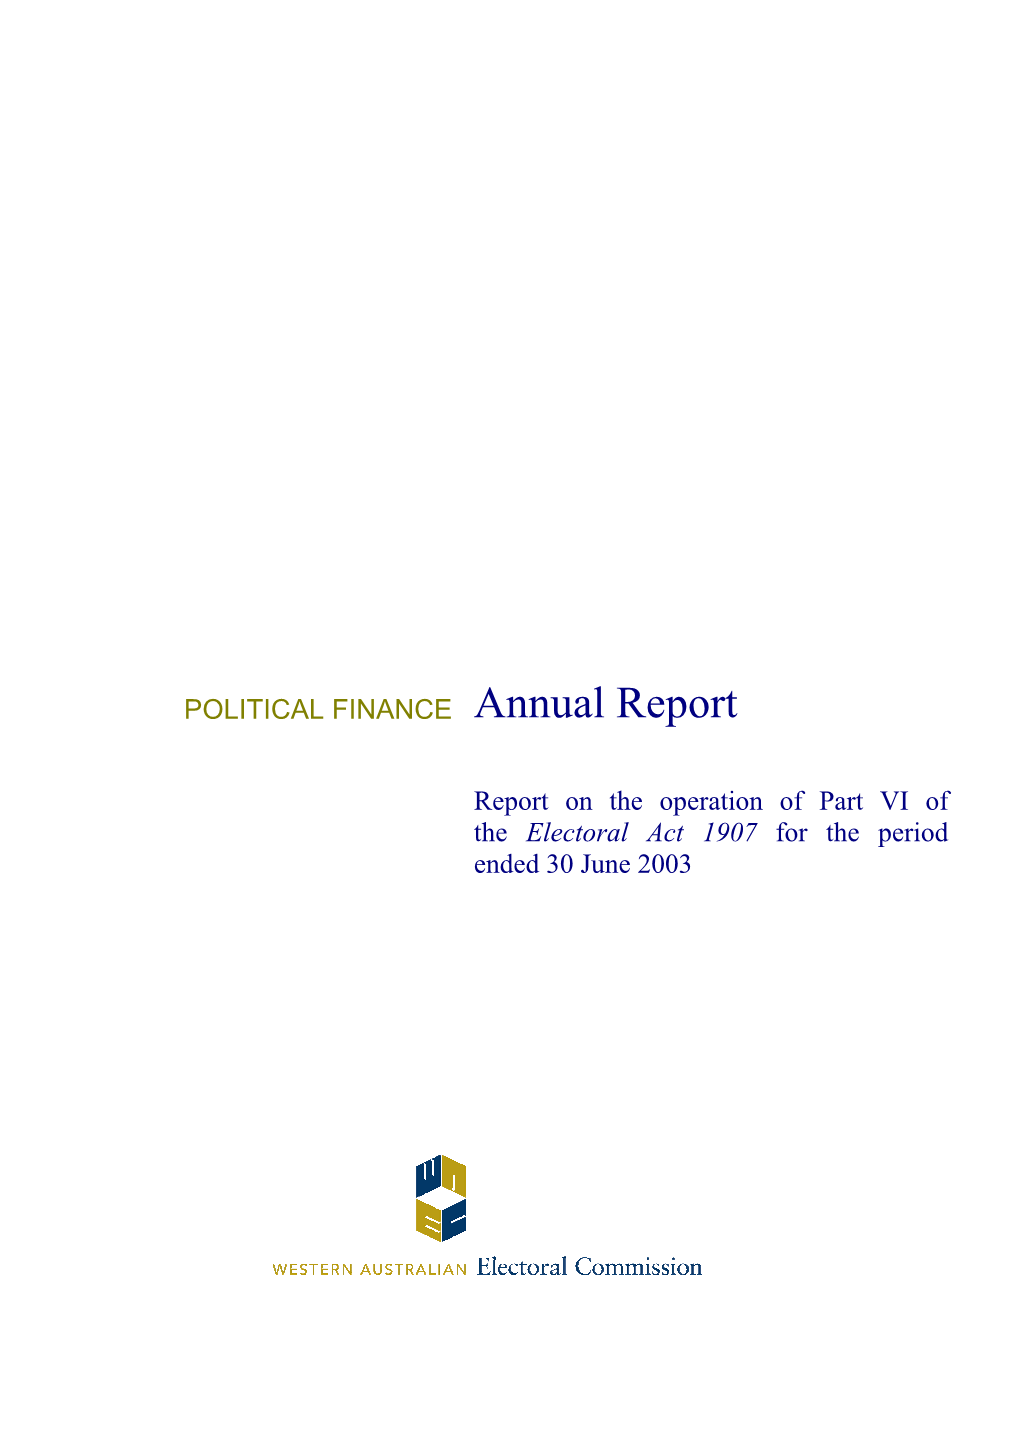 Political Finance Report 2002-03